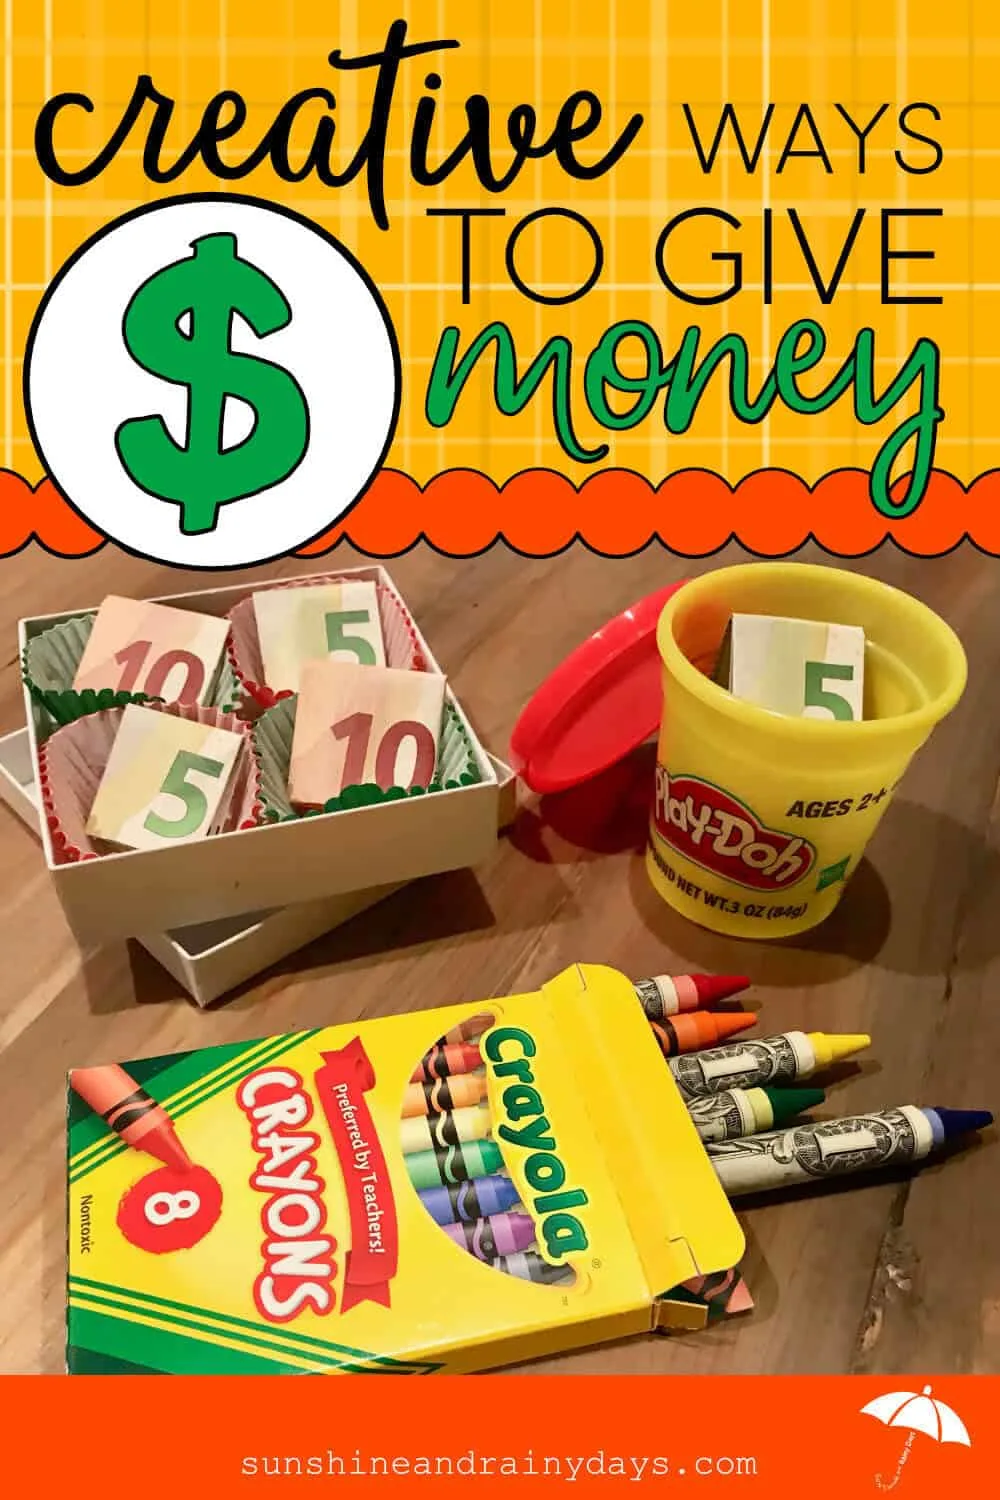 10 creative ways to give cash